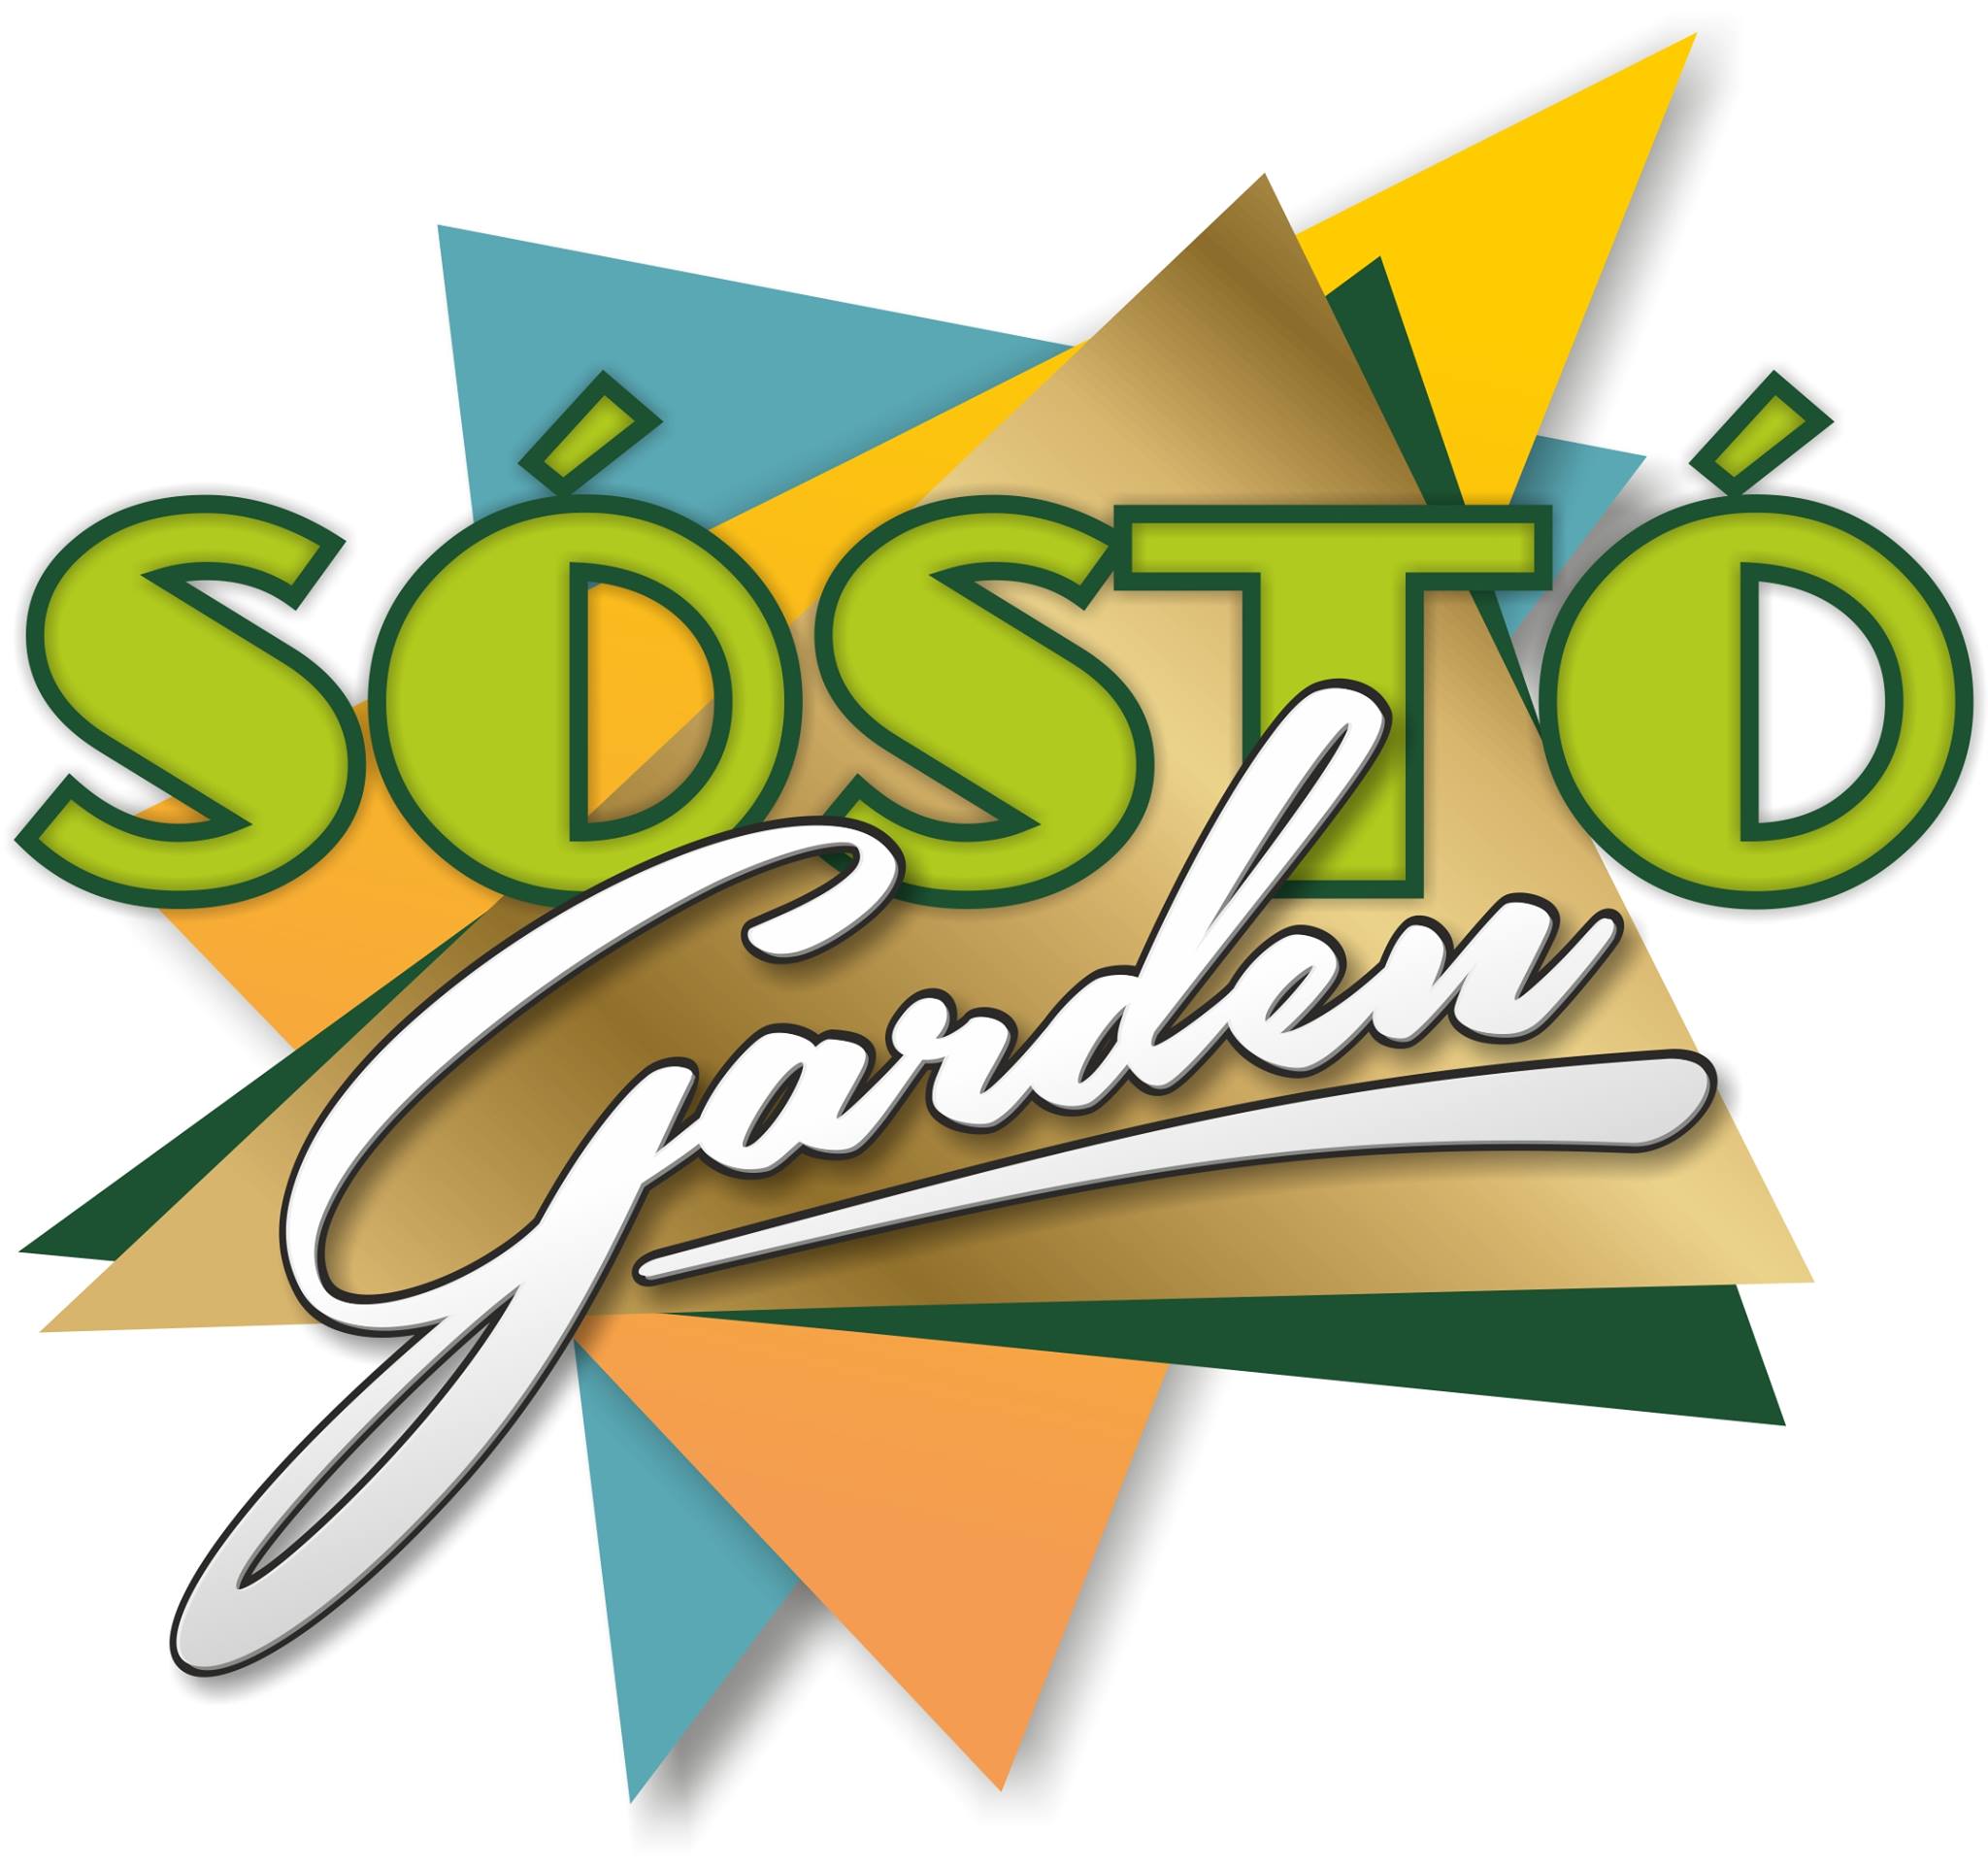 Sóstó Garden